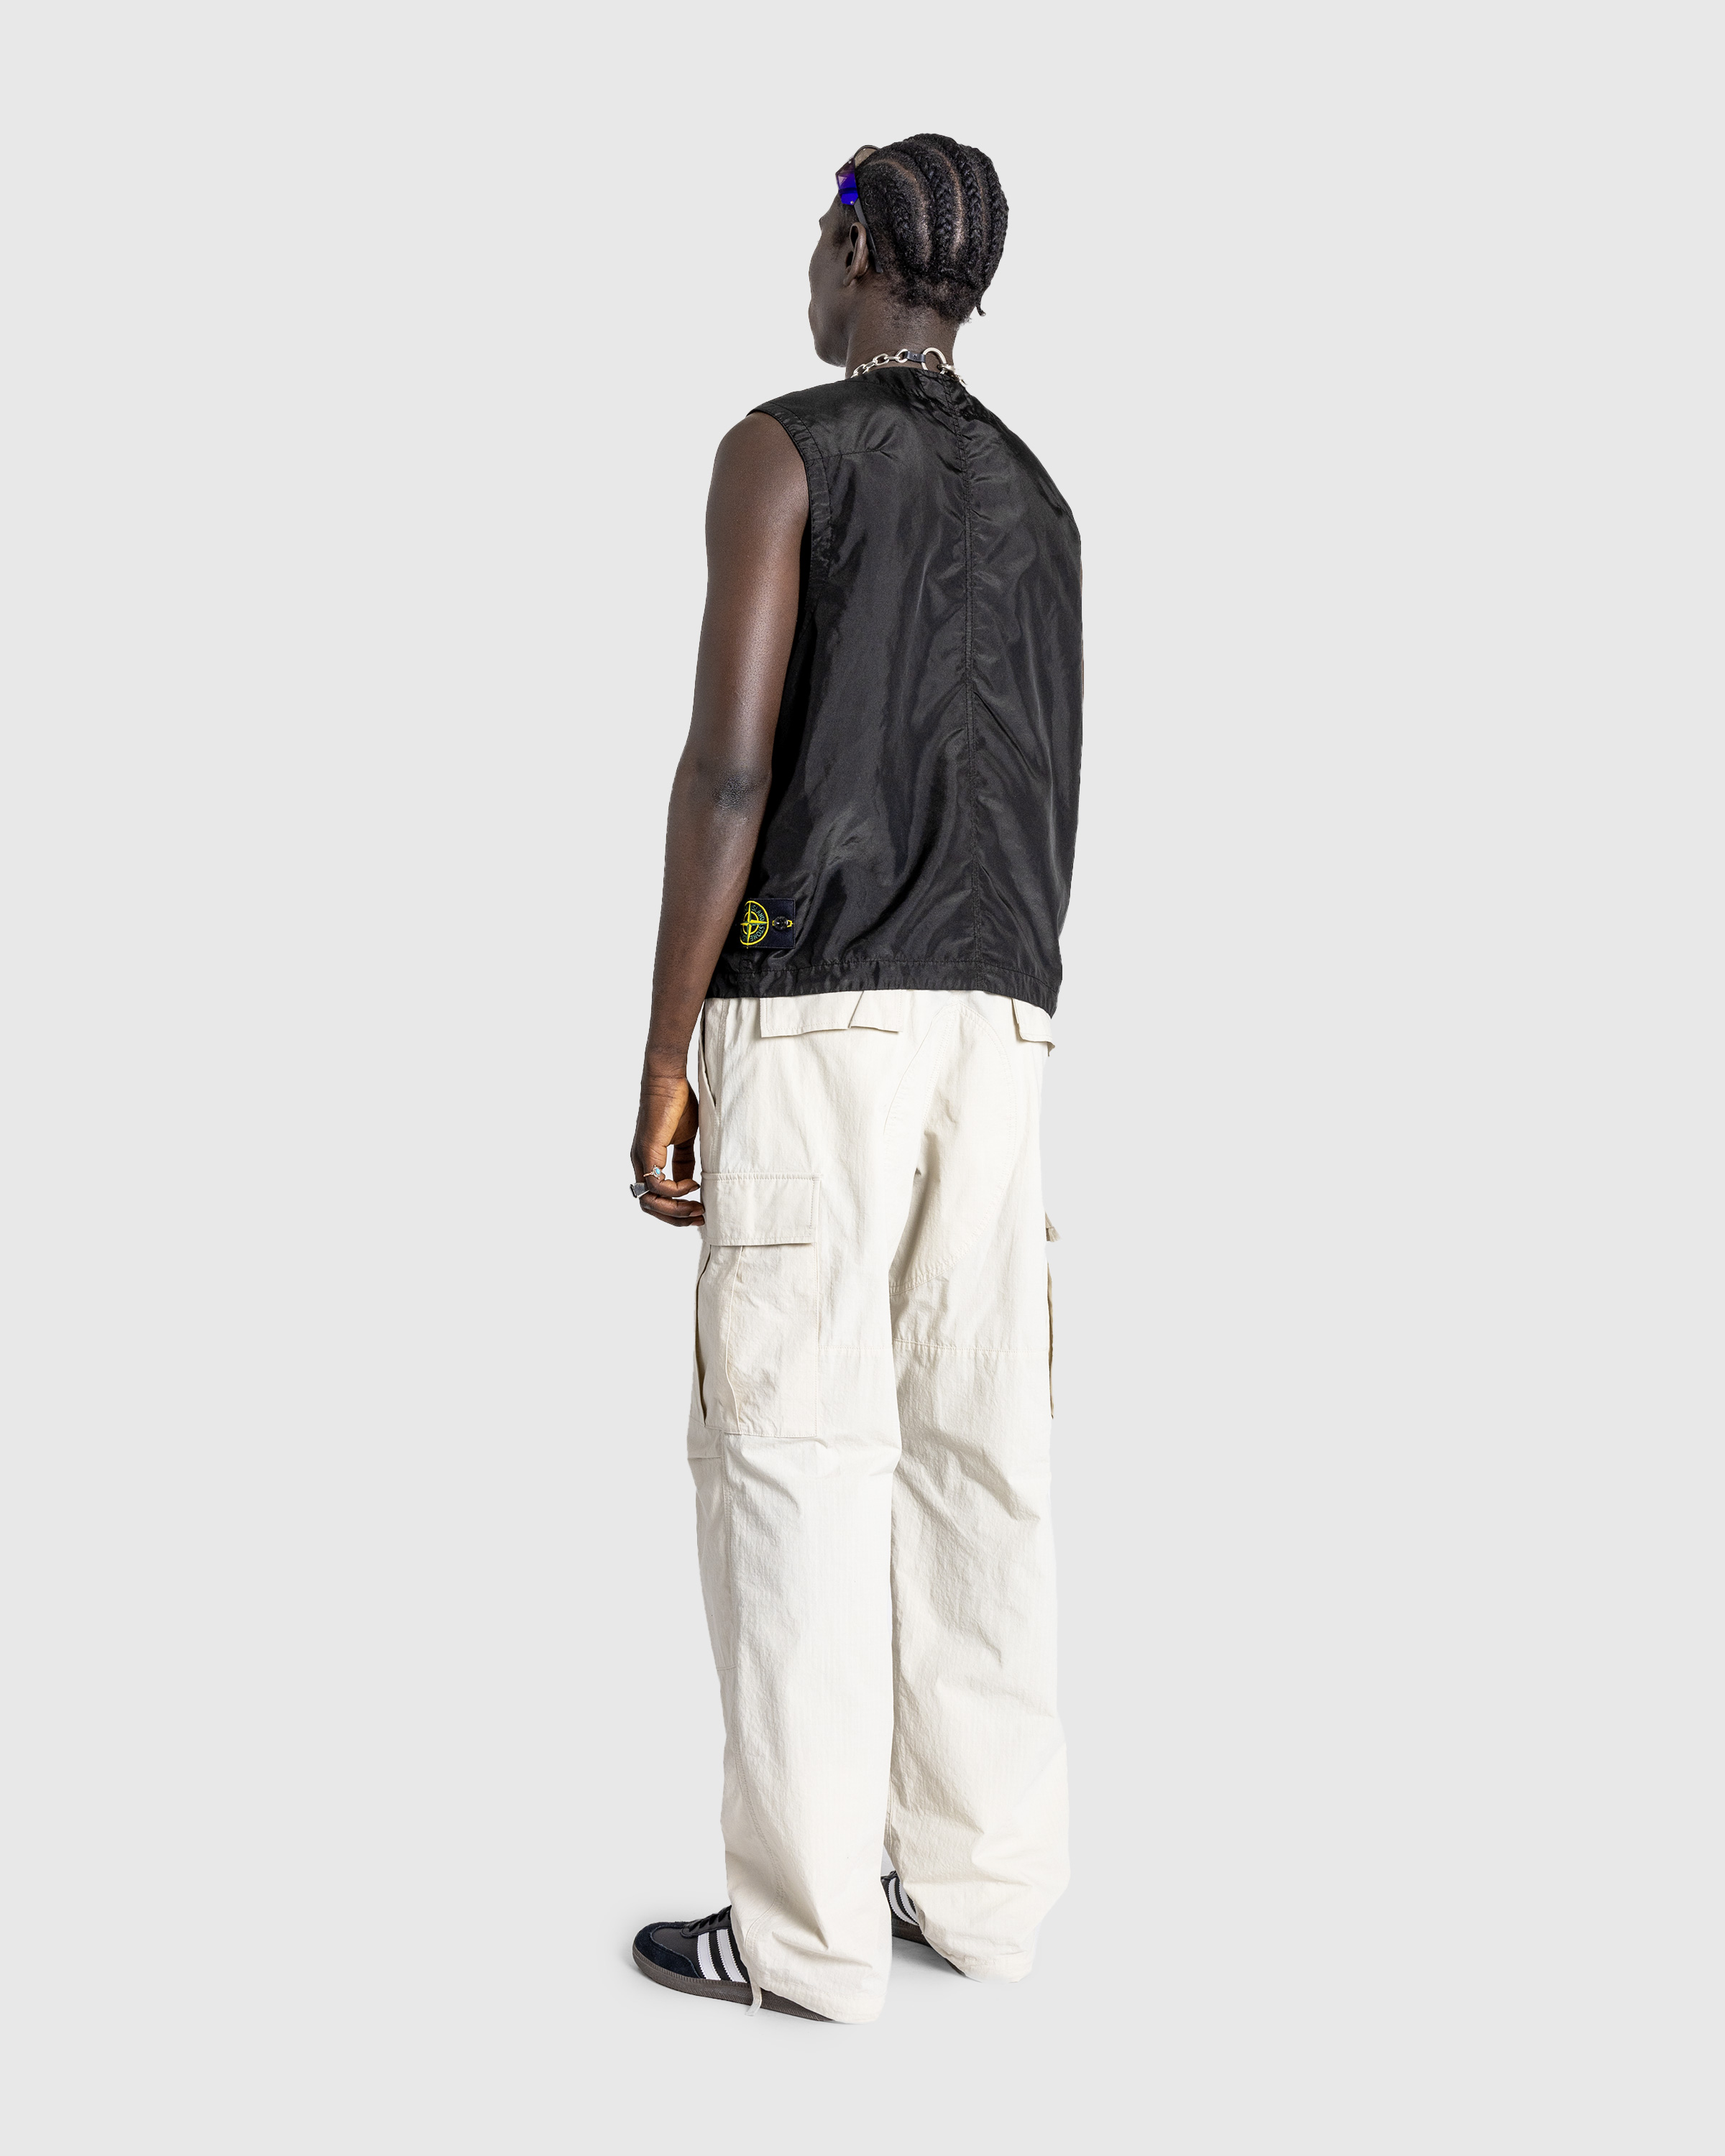 Stone Island – Garment-Dyed Vest Black - Outerwear - Black - Image 6